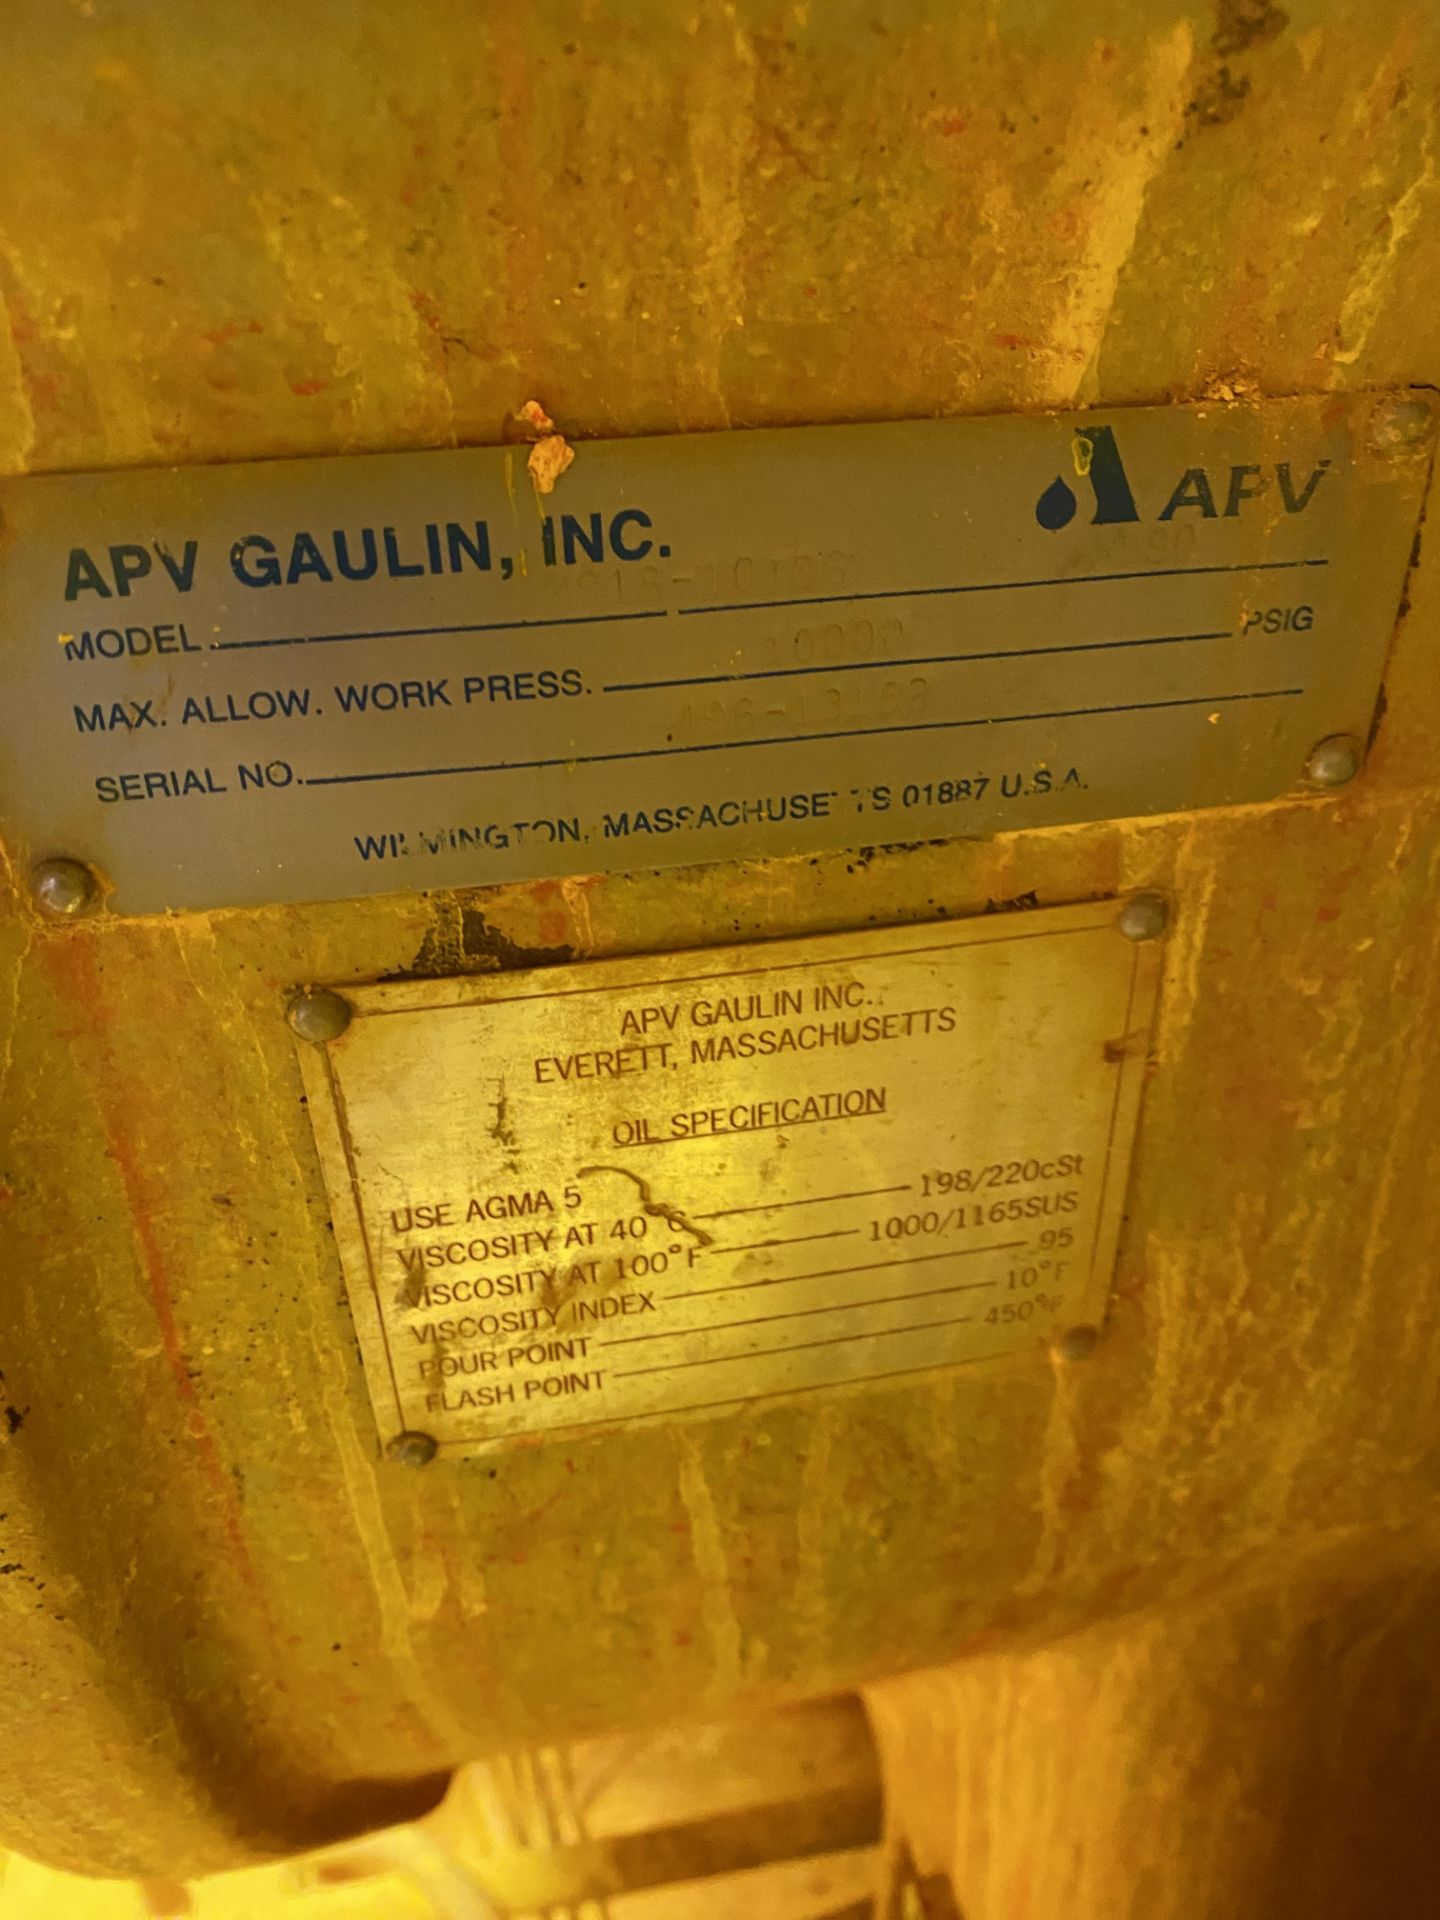 APV GAULIN MODEL MS18-10TBS, 10,000 MAX ALLOW WORK PRESS, S/N 496-13152 W/ LARGE MOTOR SPECS, N/A ( - Image 3 of 3